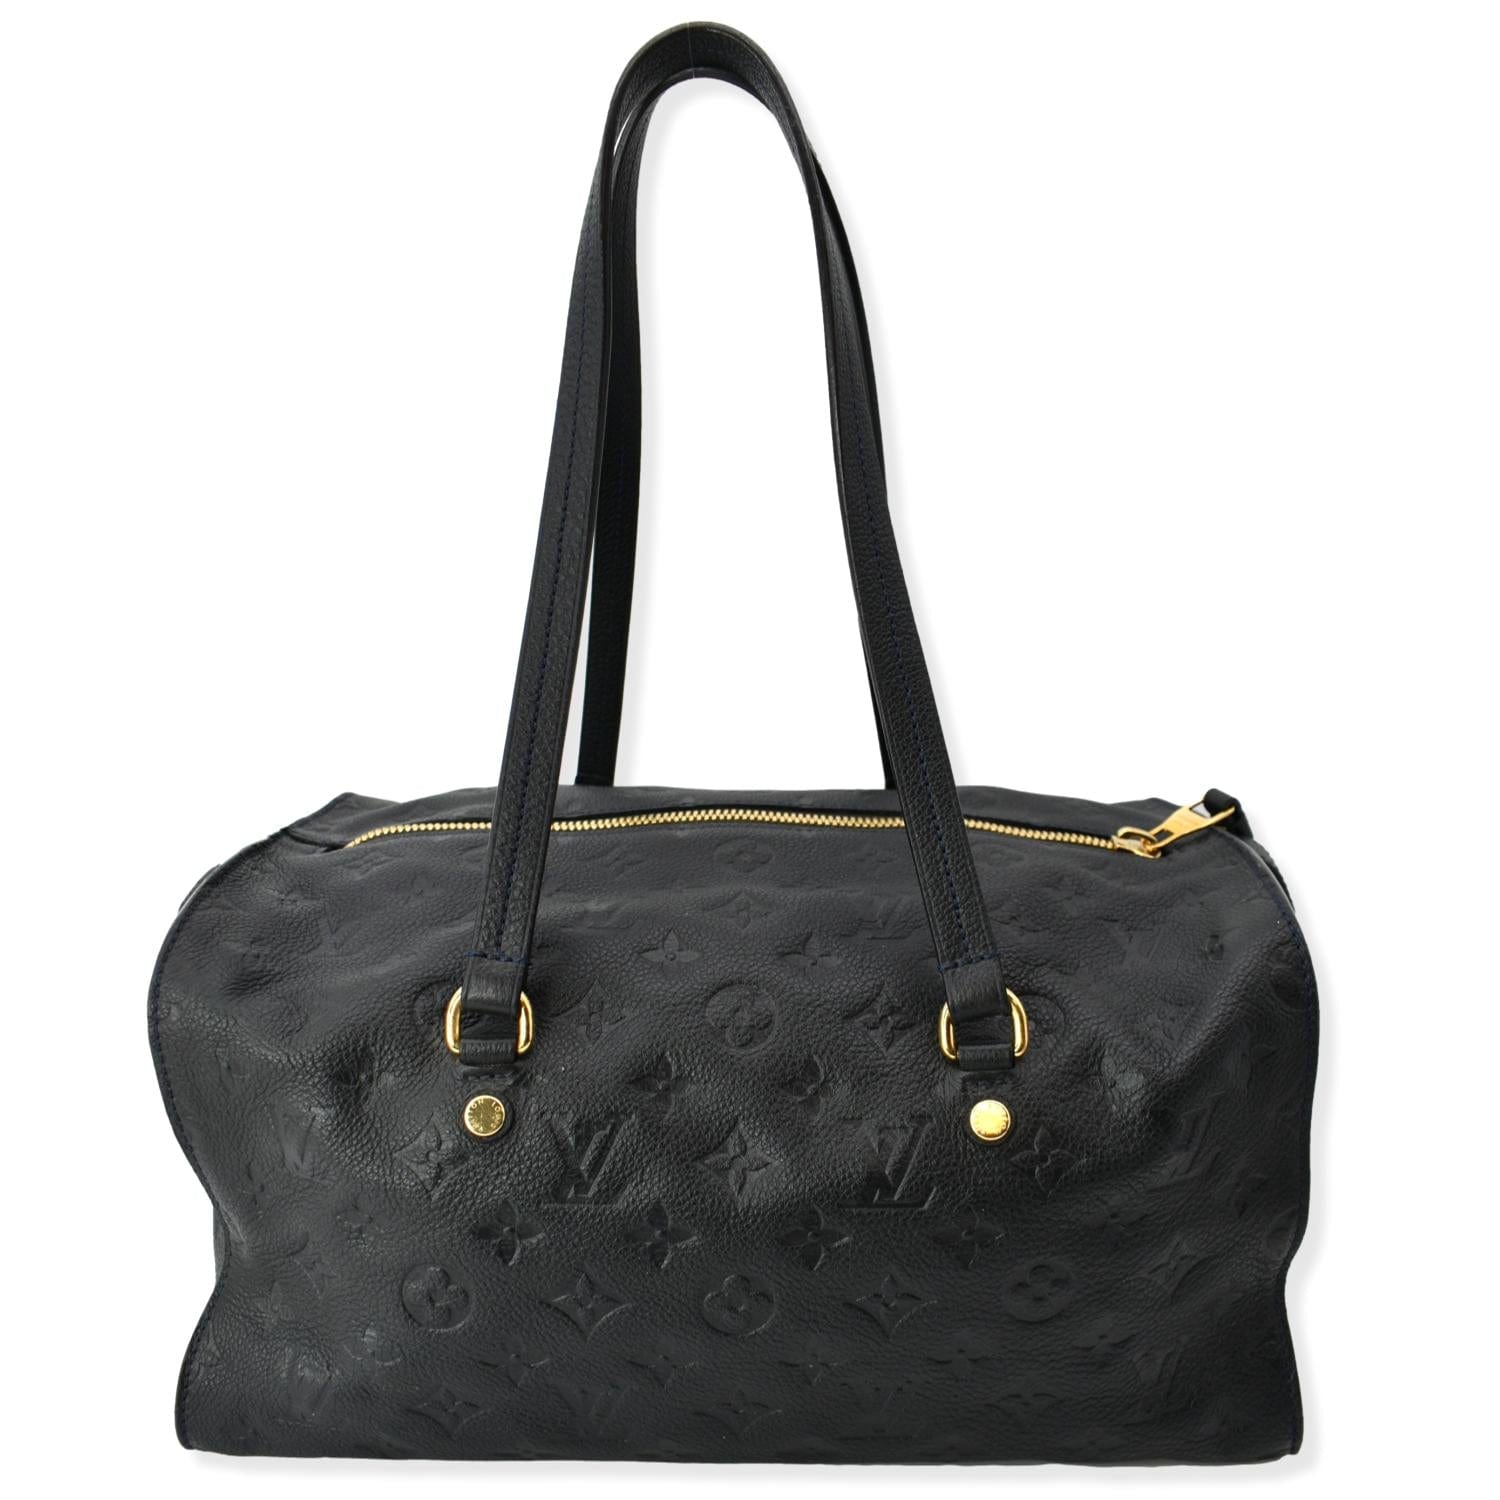 Versatile Louis Vuitton 🧡 How would you wear this bag? #fashionphile  #usedisthenewnew #designer #ultraluxury #louisvuitton #lv #lvbag